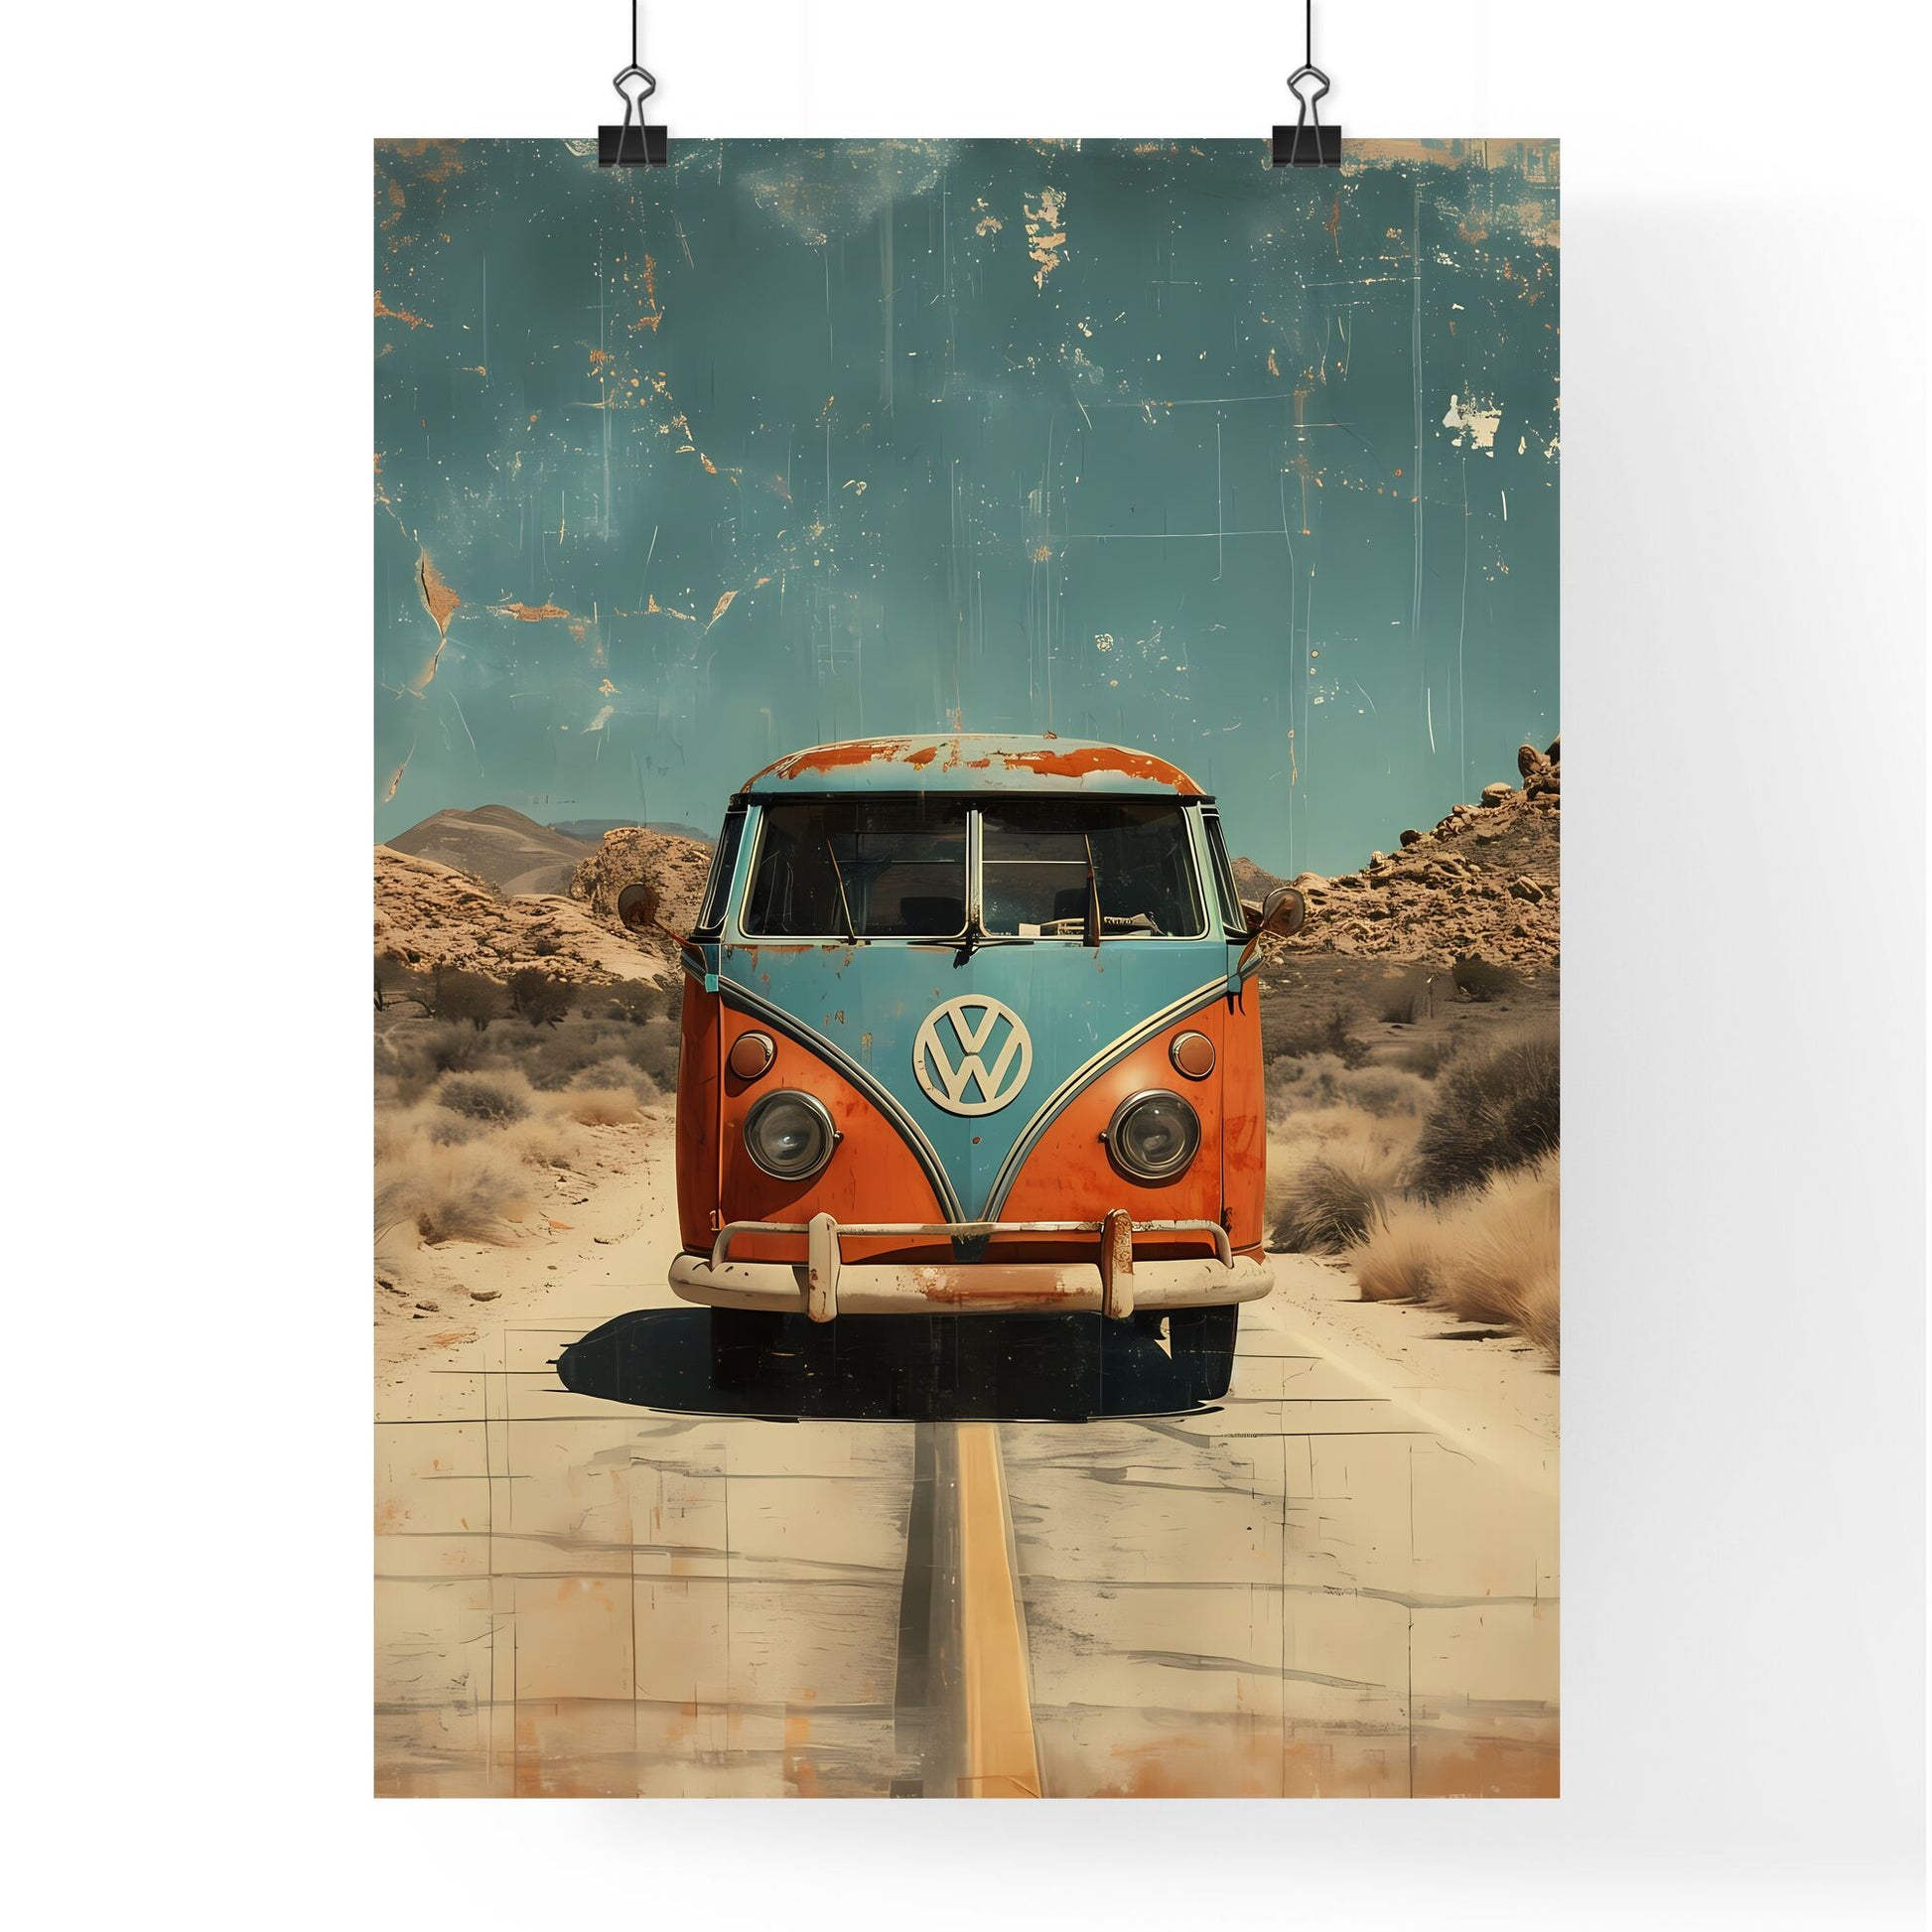 A van drives down the long road - Art print of an orange and blue van driving down a road Default Title